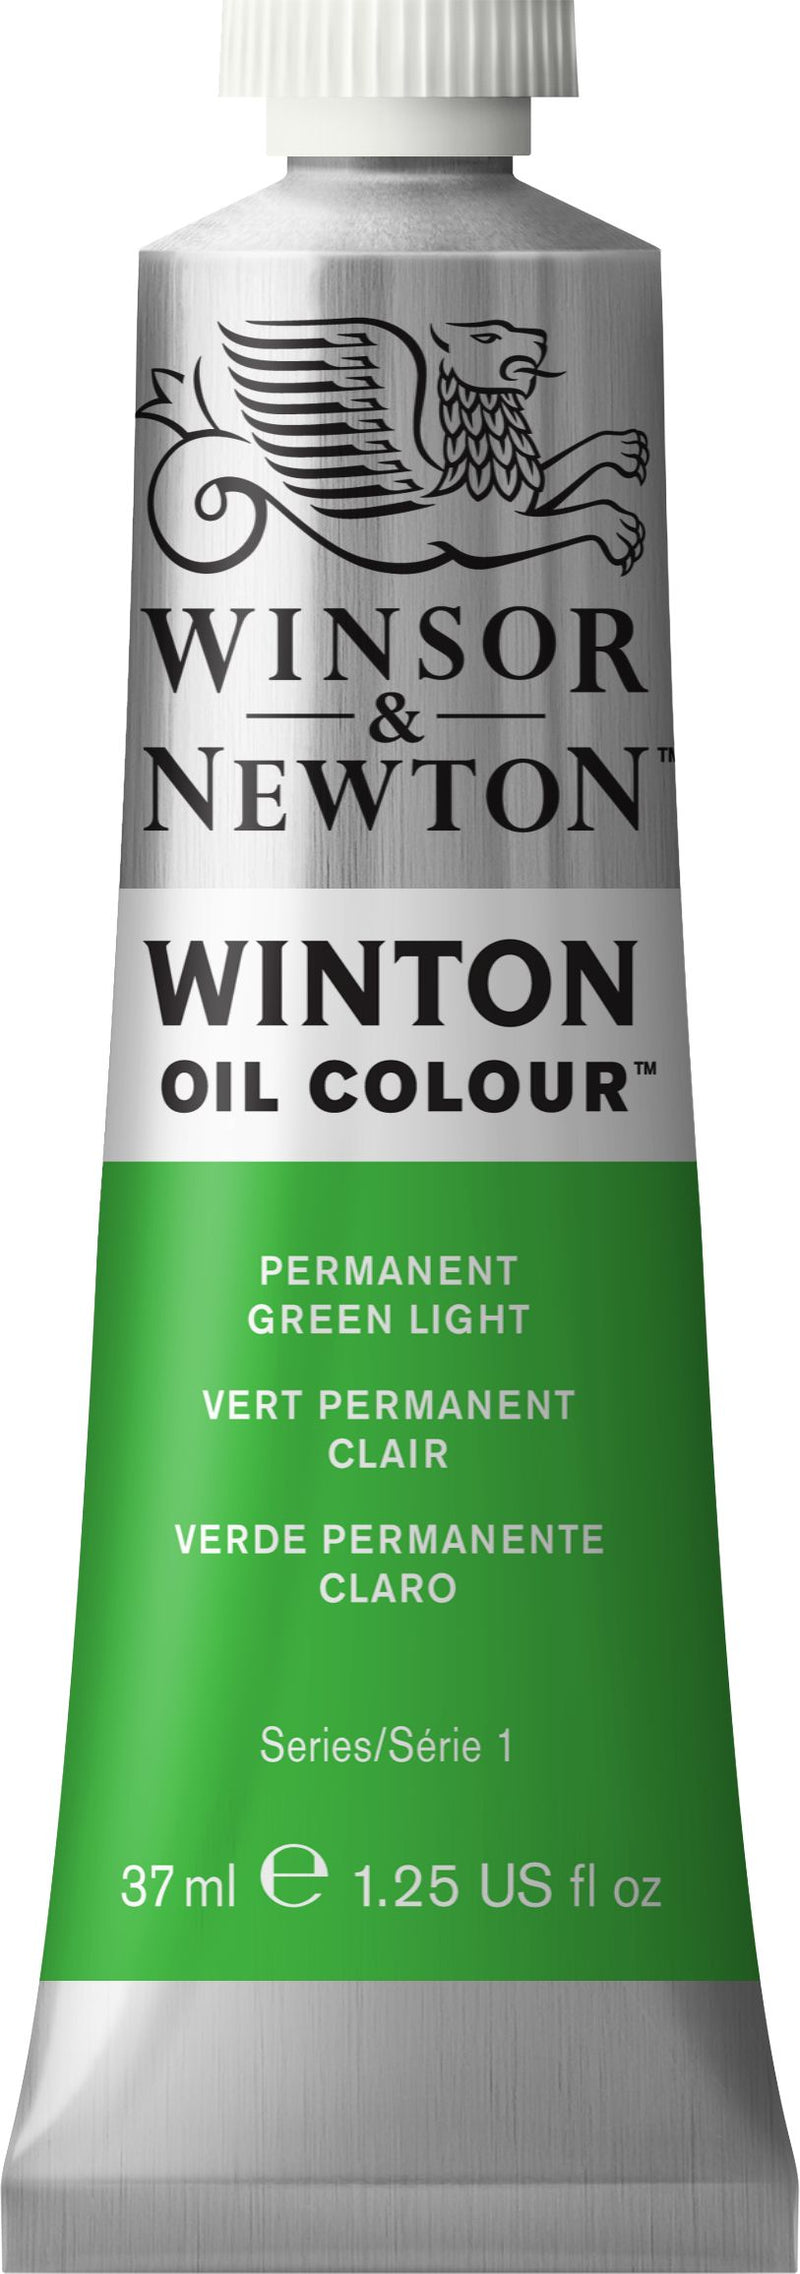 Winton Oil Colour Permanent Green Light - 37ml tube